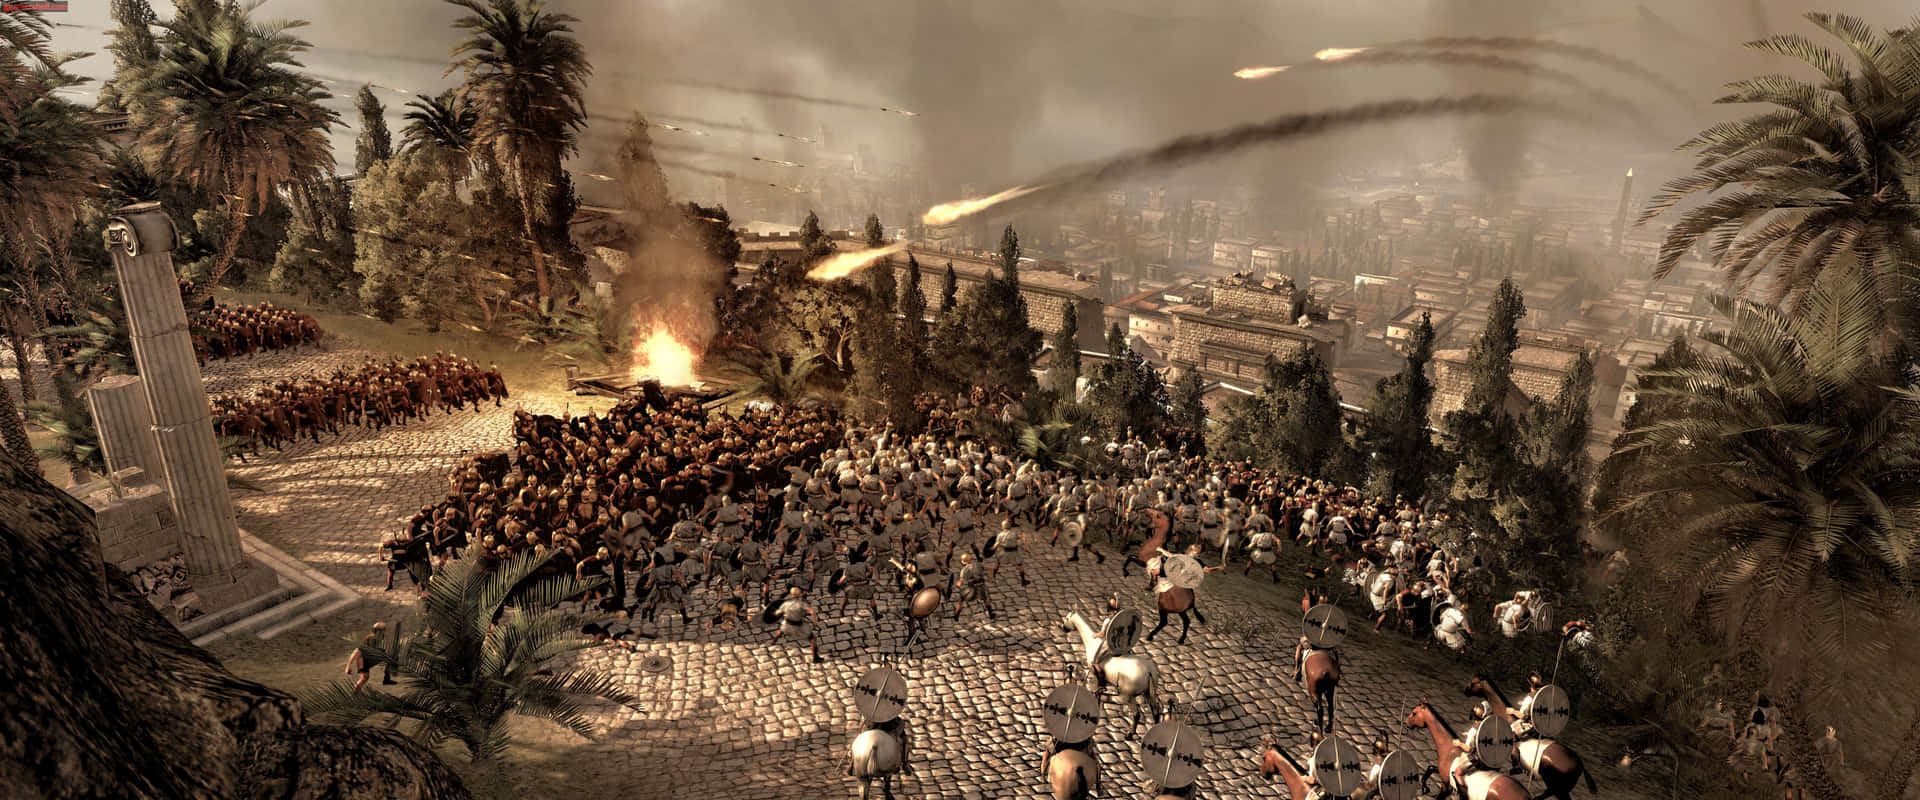 A Screenshot Of A Battle In A City